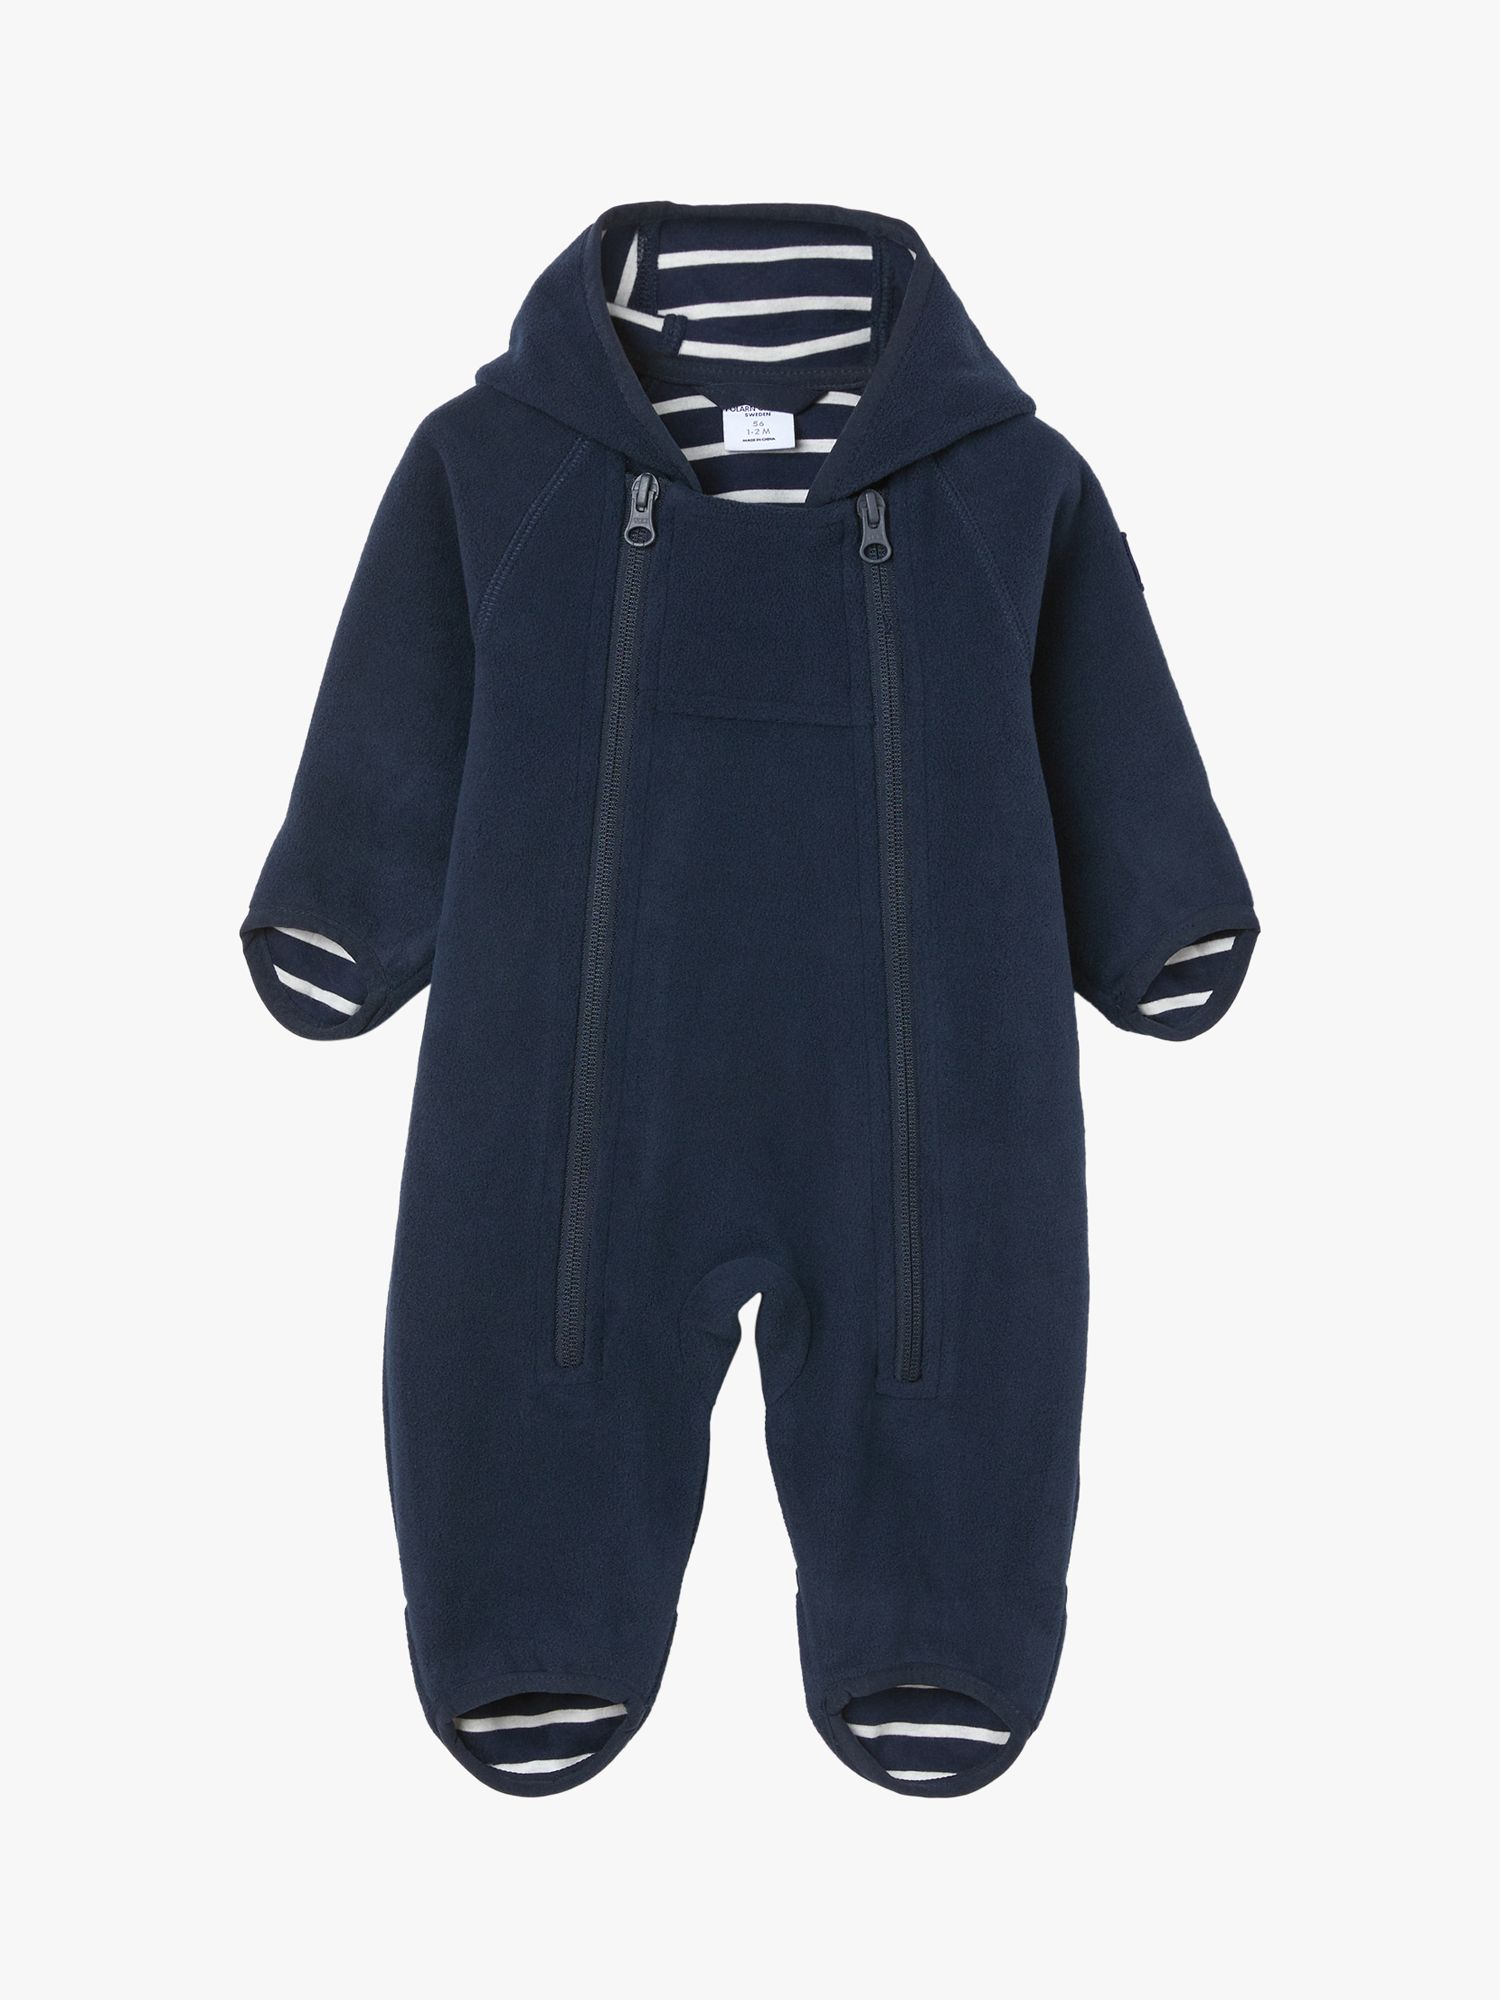 Buy Polarn O. Pyret Baby Fleece Snowsuit, Blue Online at johnlewis.com